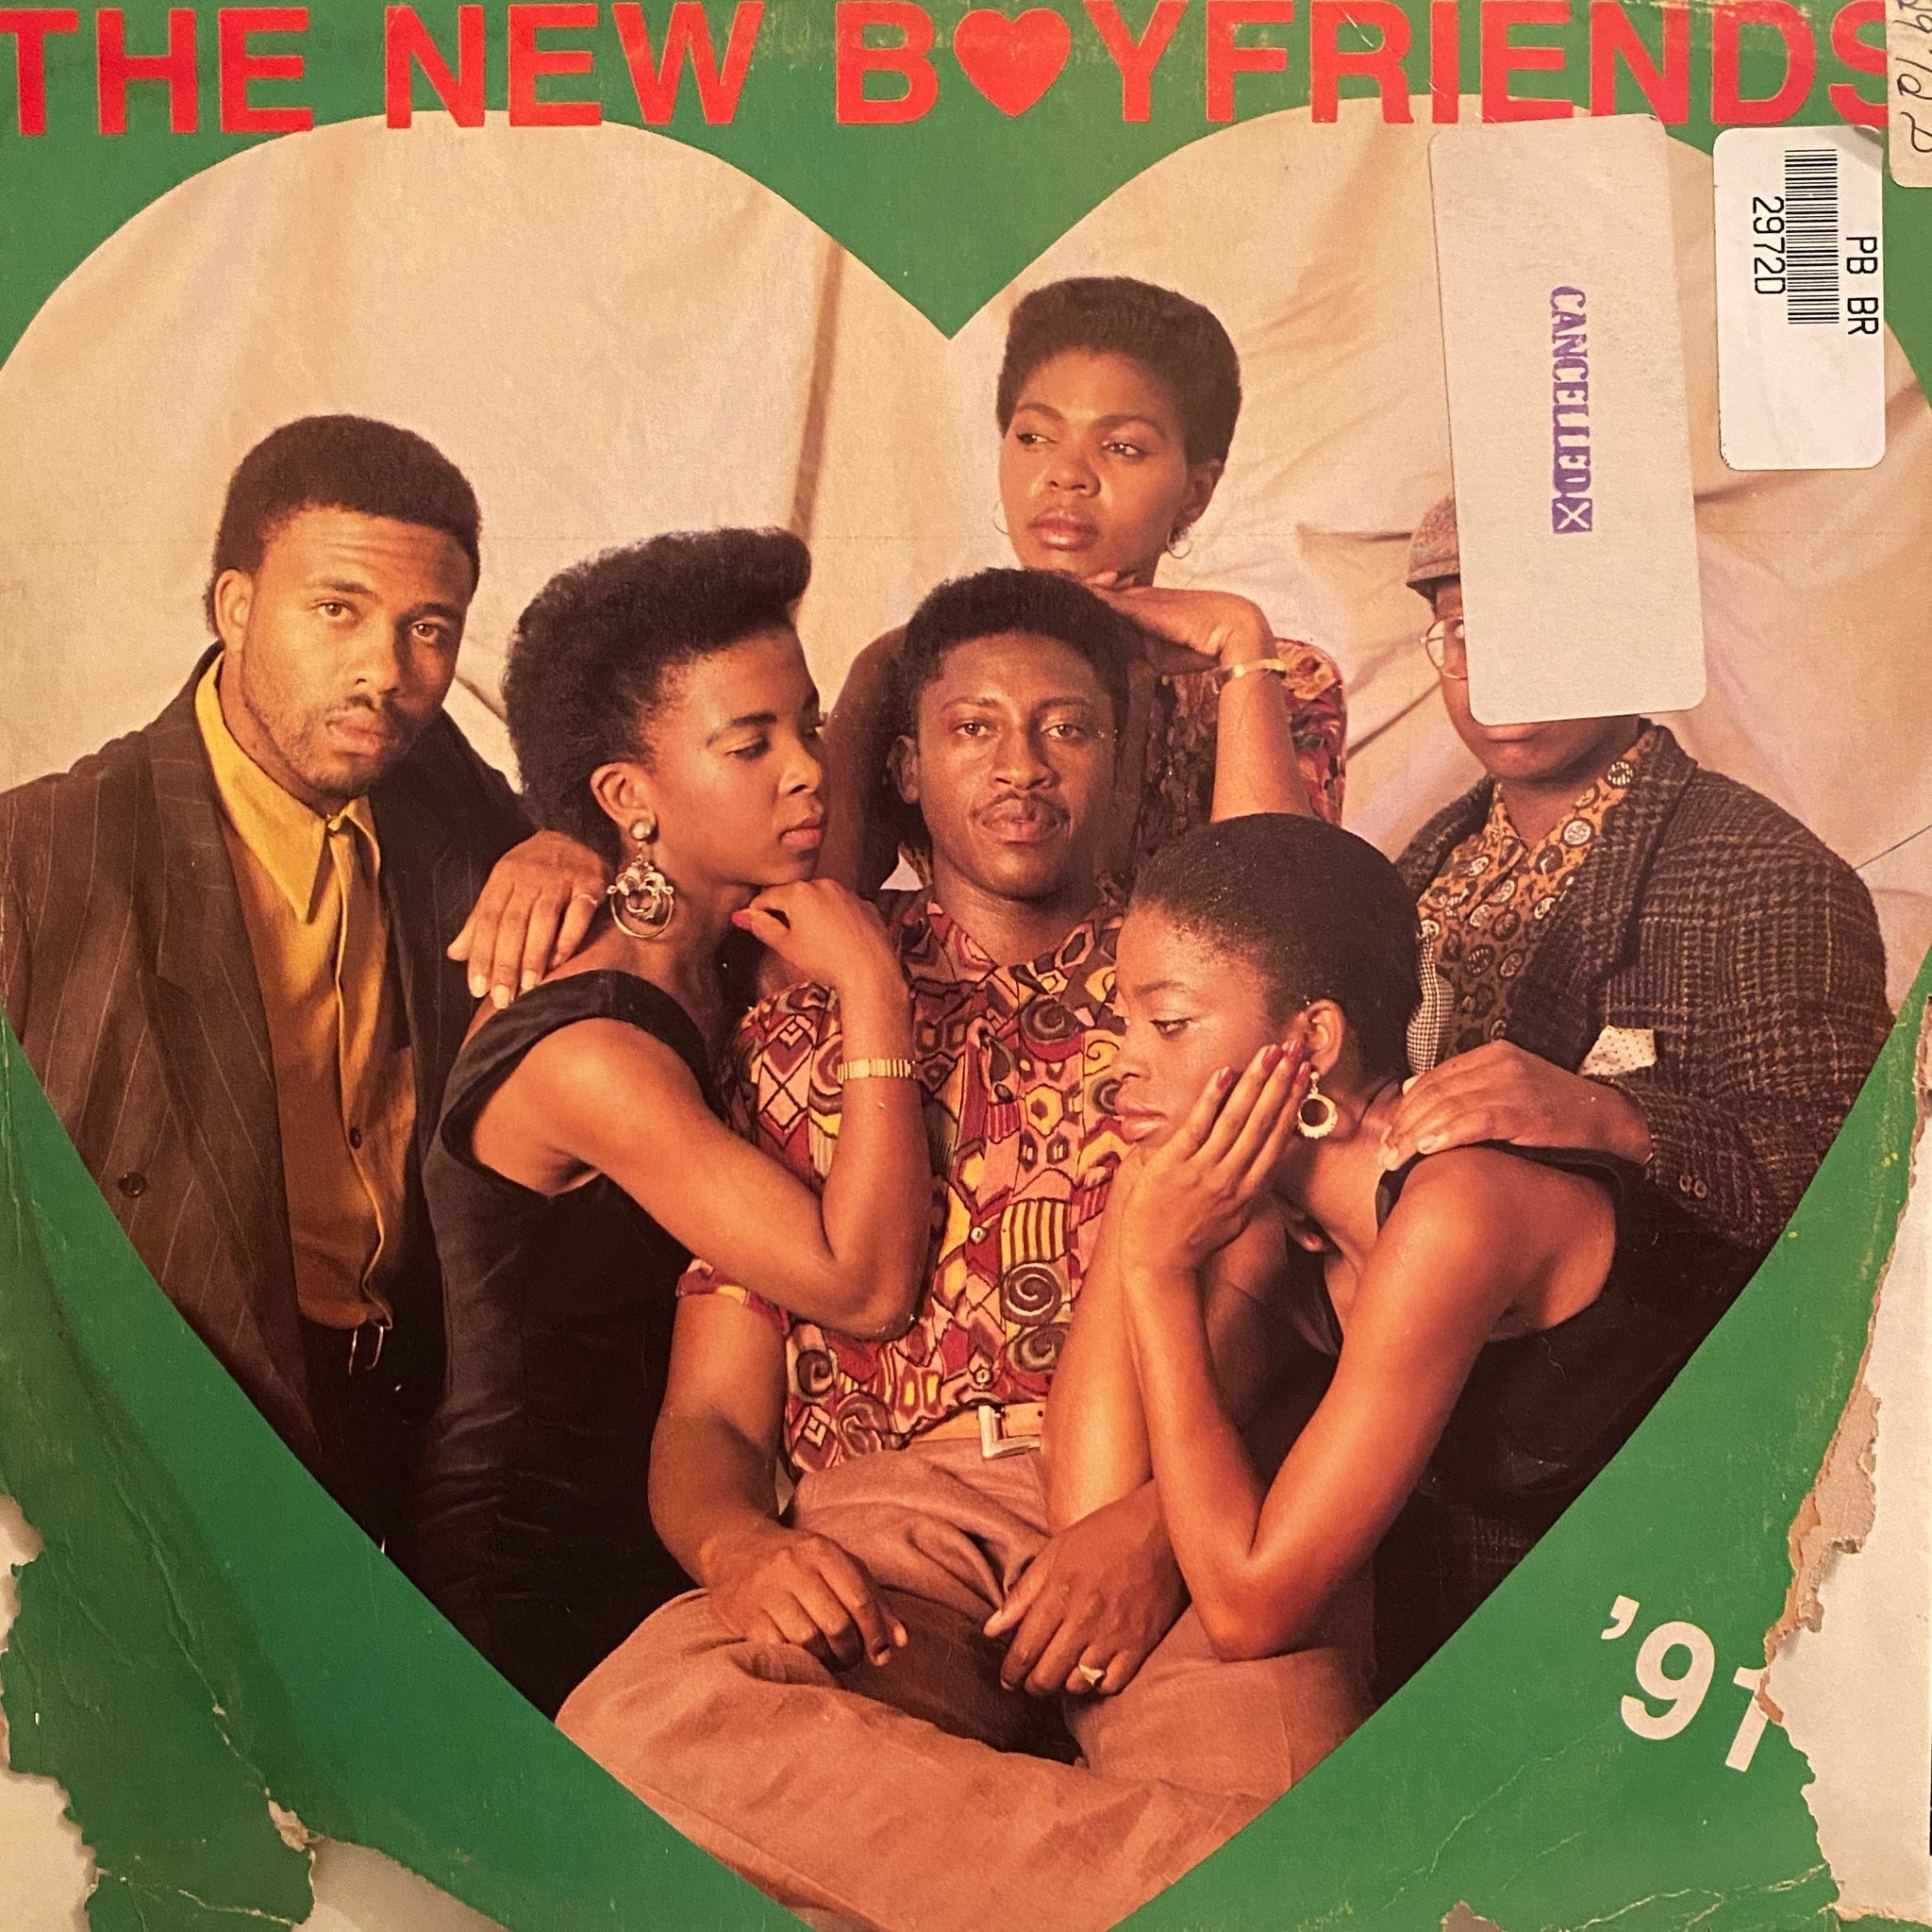 The New Boyfriends – '91